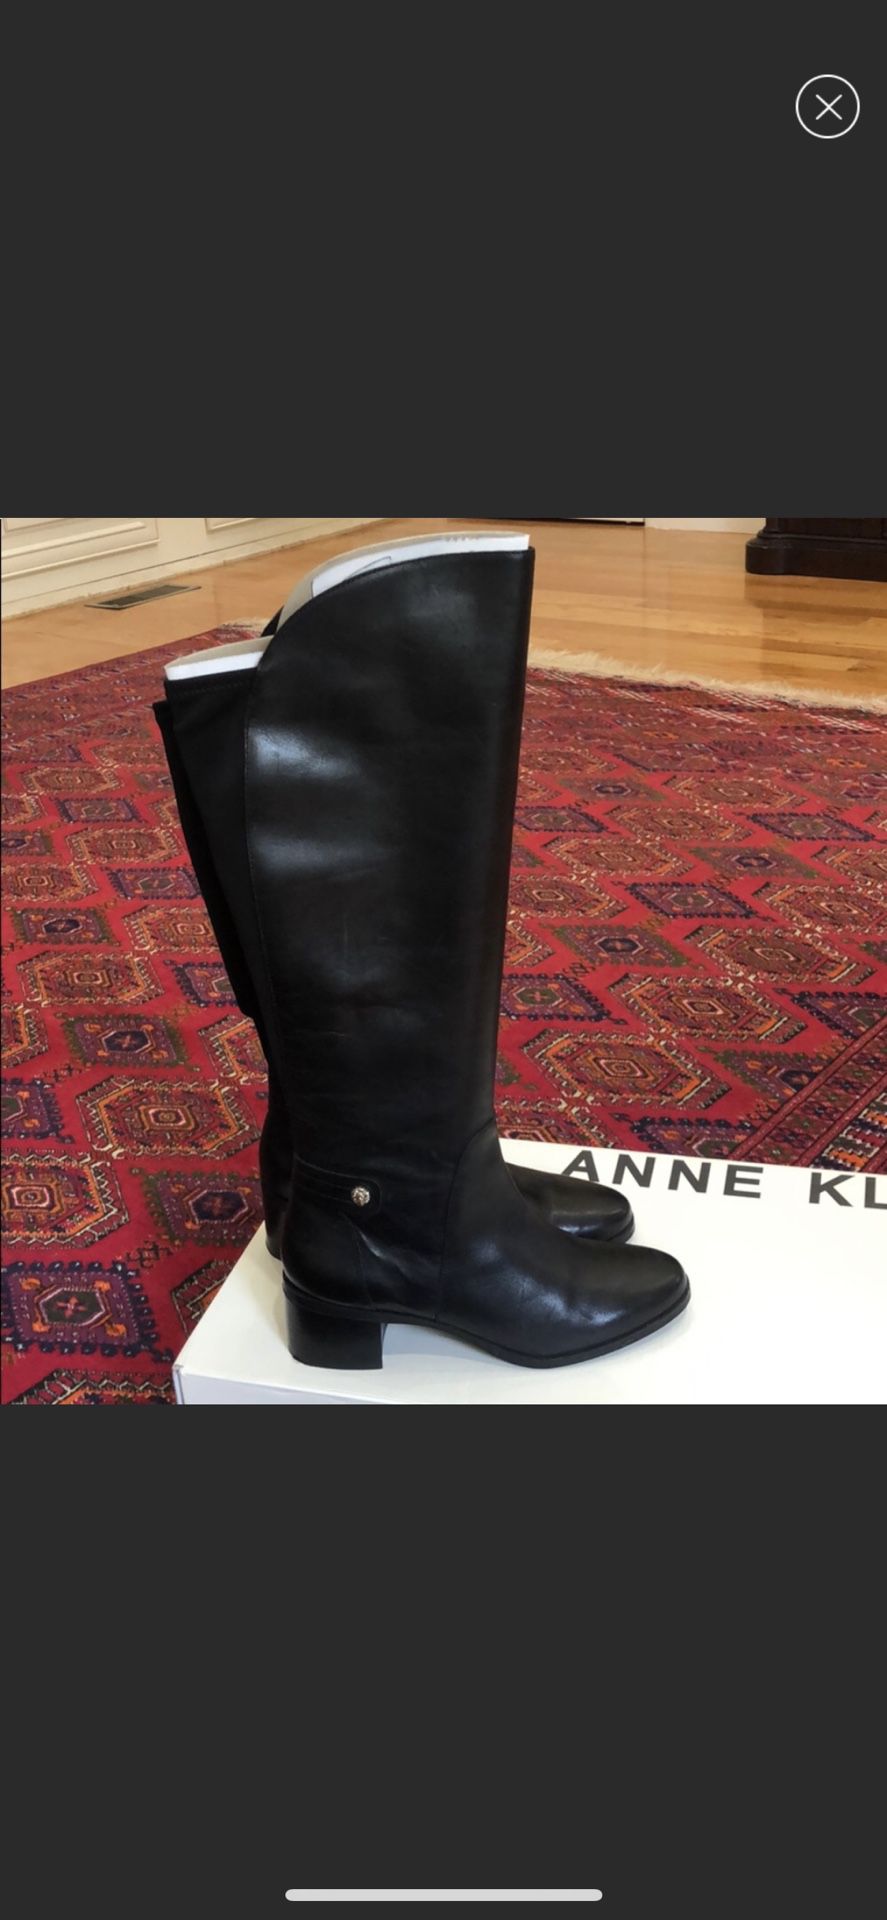 Knee high Anne Klein fashion boots/black/leather